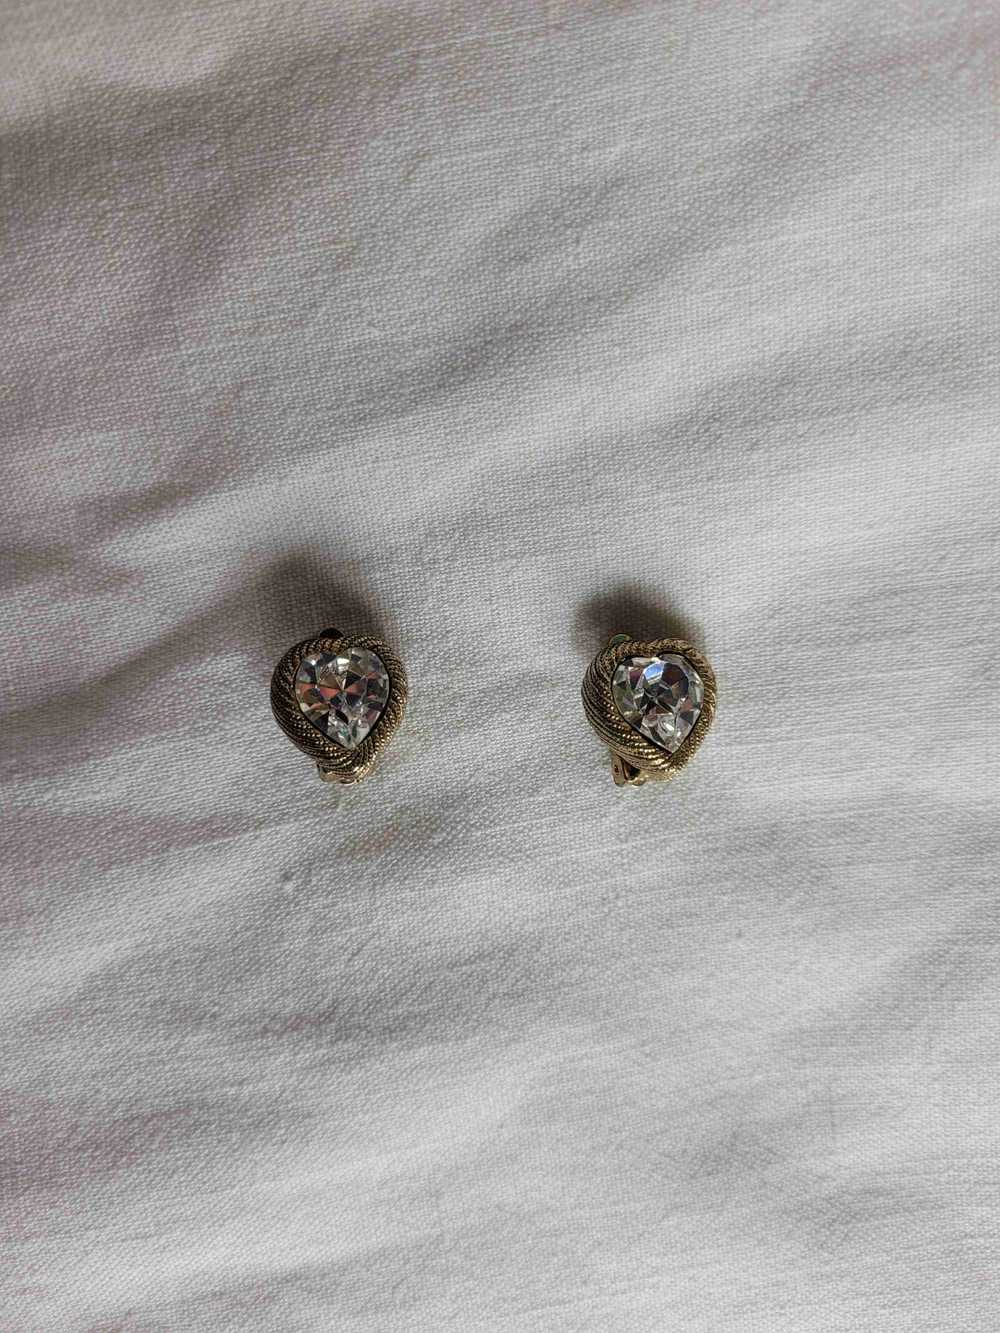 Golden metal earrings - Heart-shaped golden metal… - image 3